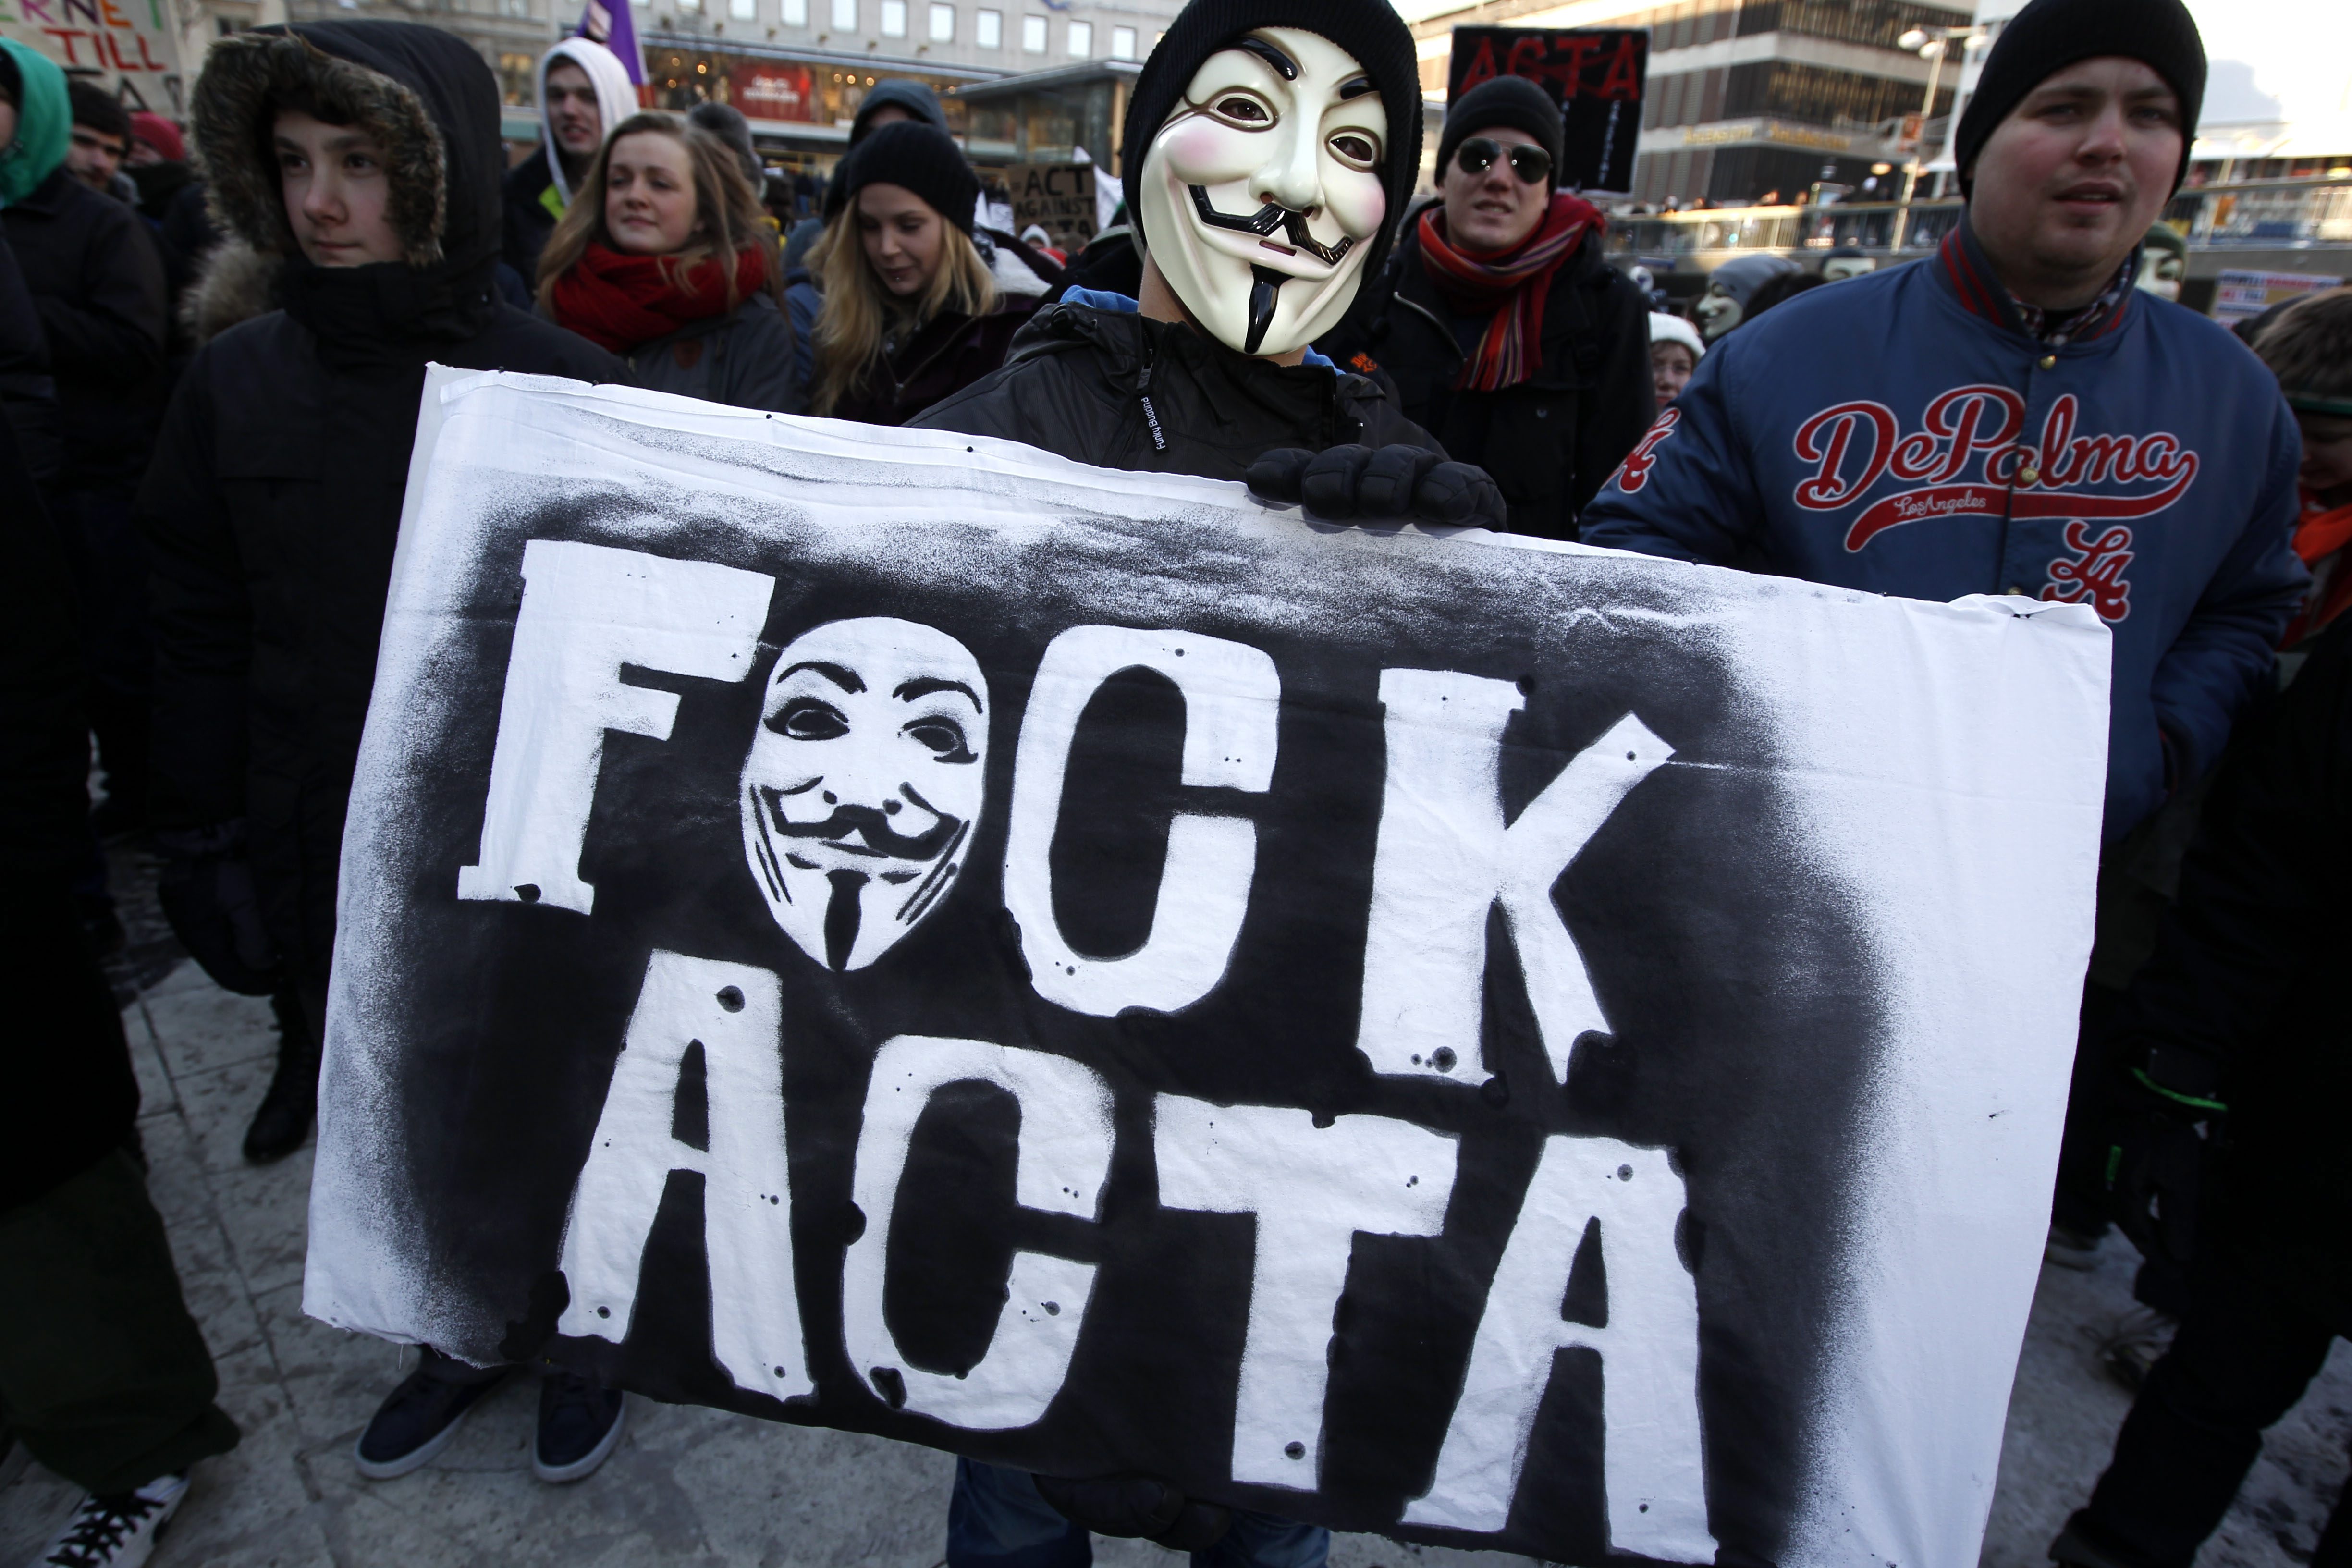 Acta, Fildelning, Piratpartiet, Internet, EU, Integritet, Politik